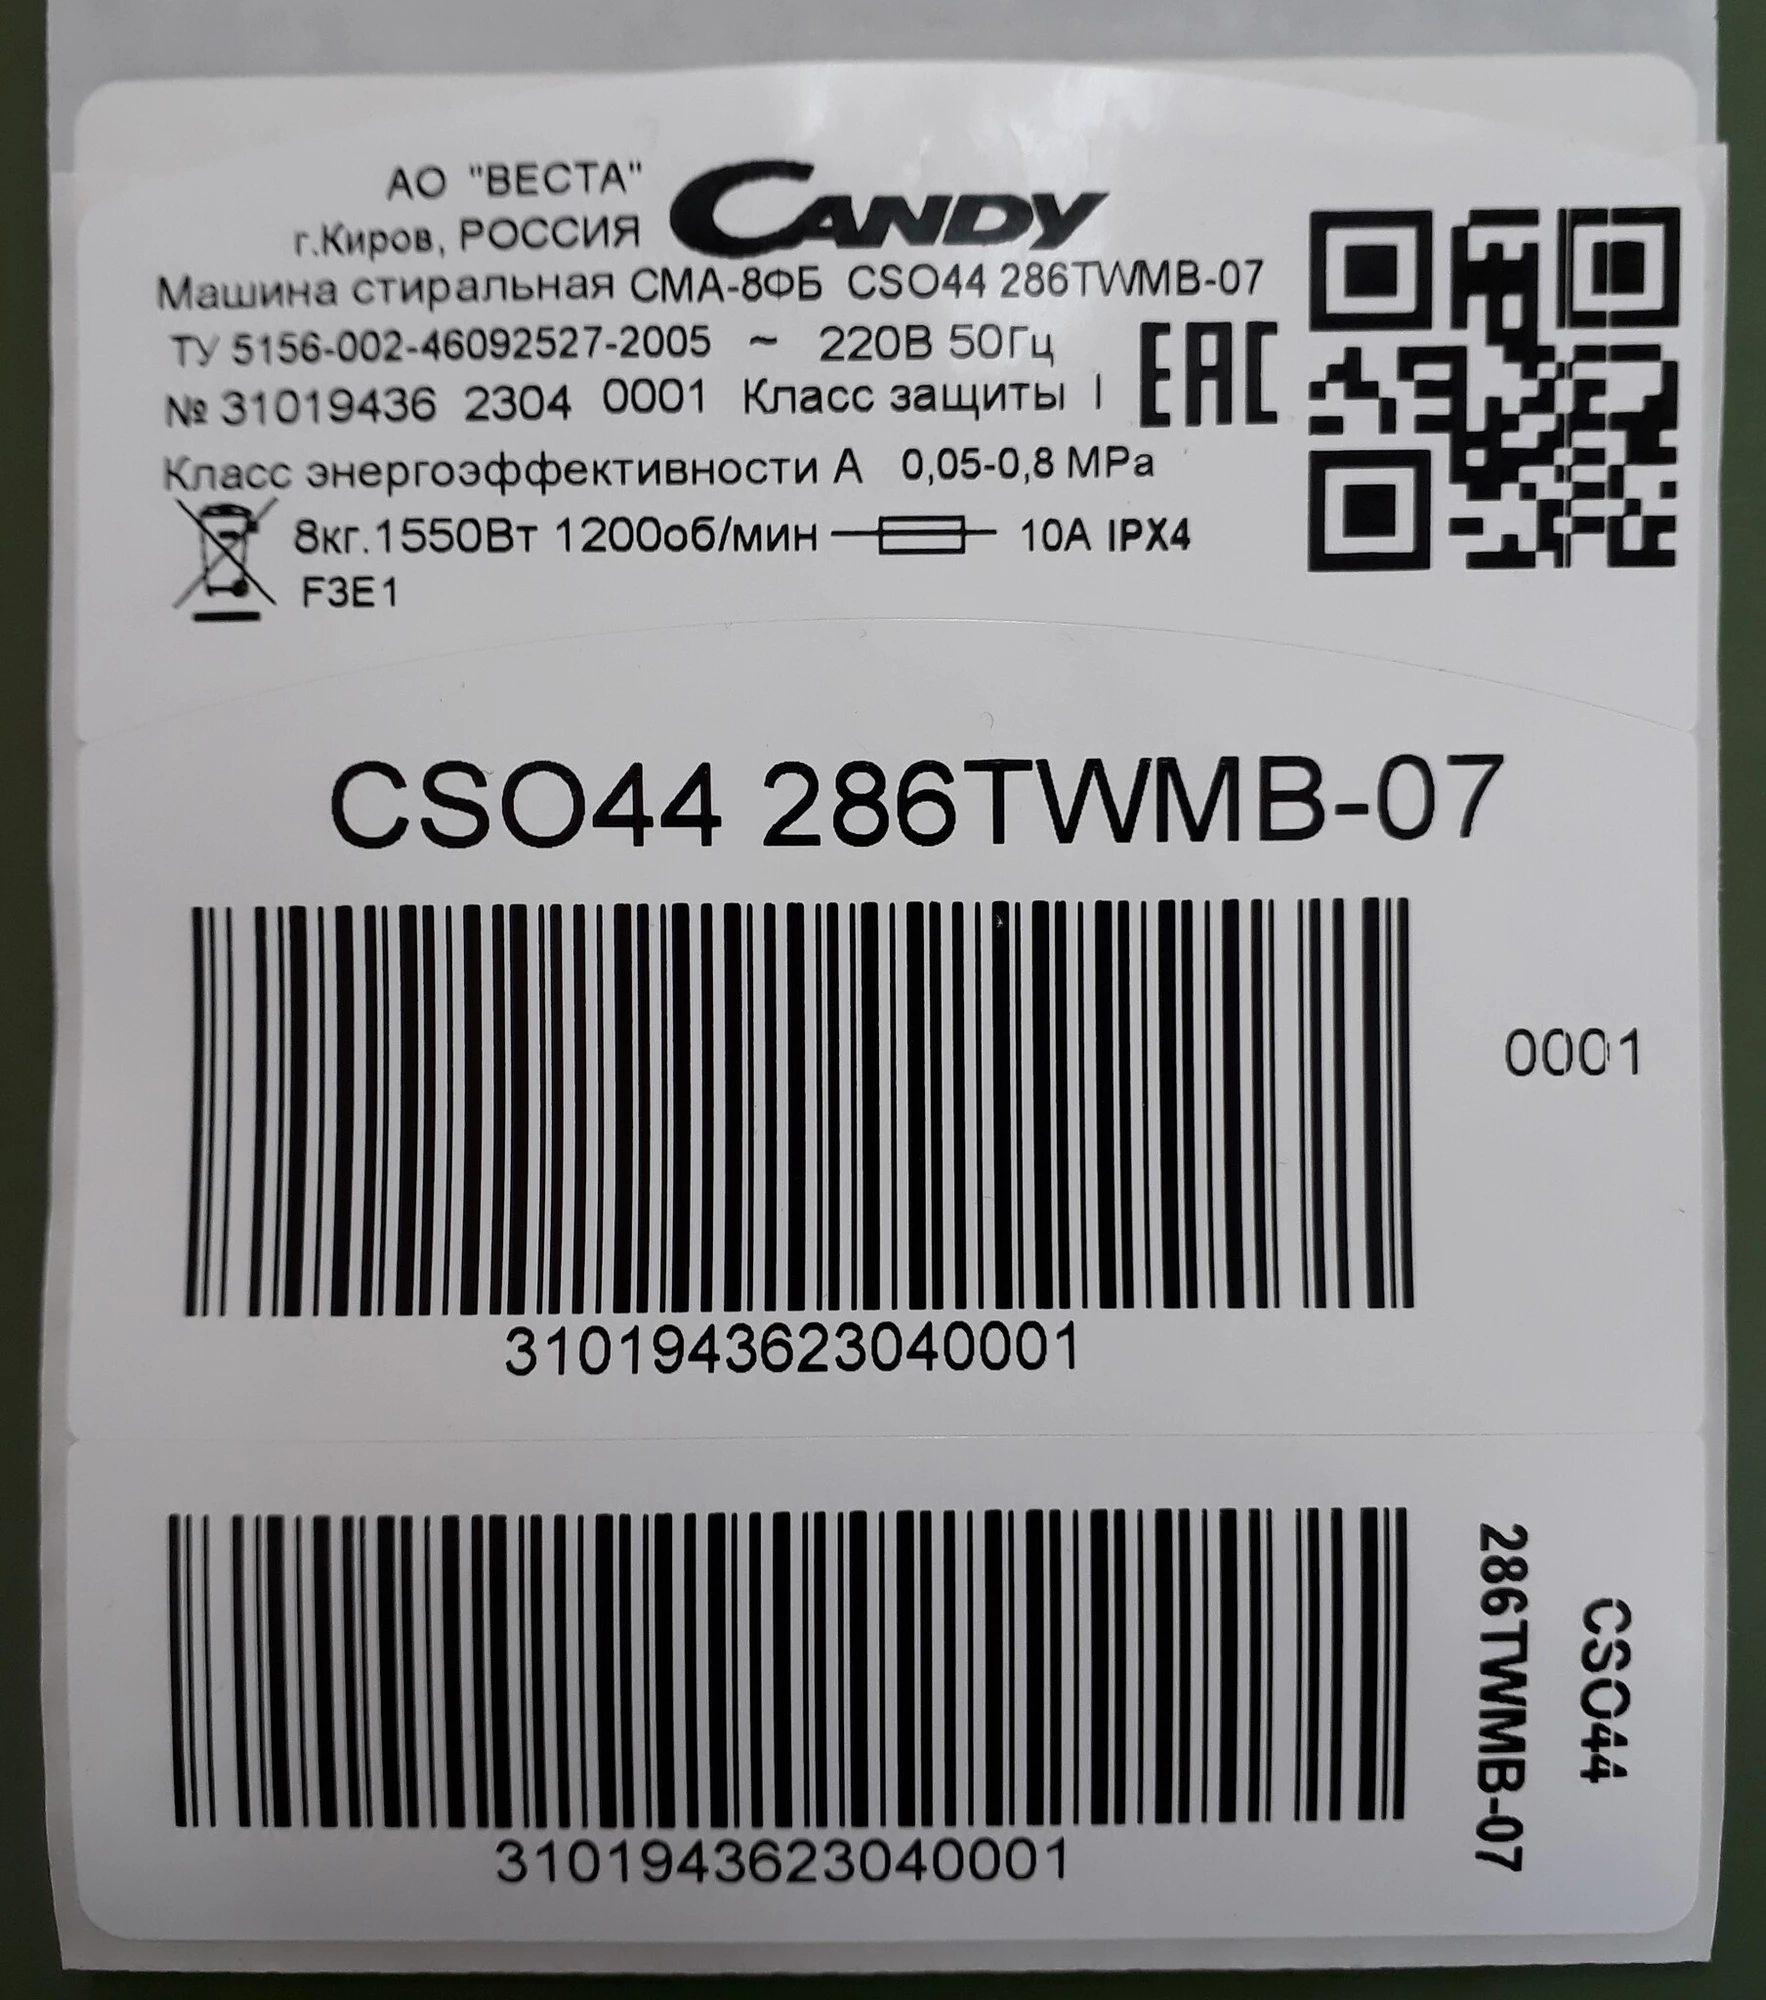 Стиральная машина Candy Smart Pro Inverter CSO44 286TWMB-07